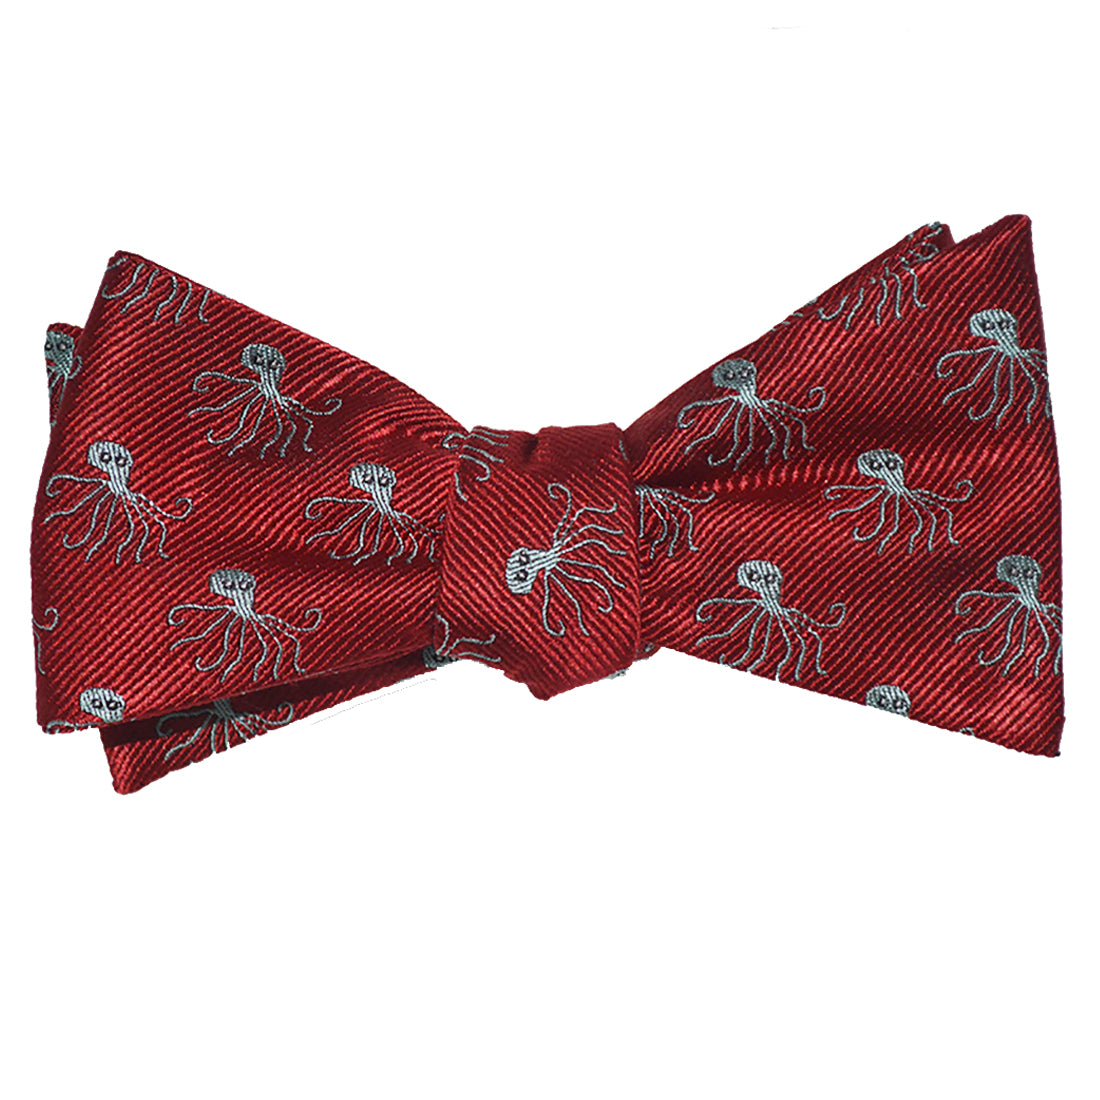 Octopus Bow Tie - Red, Woven Silk - SummerTies